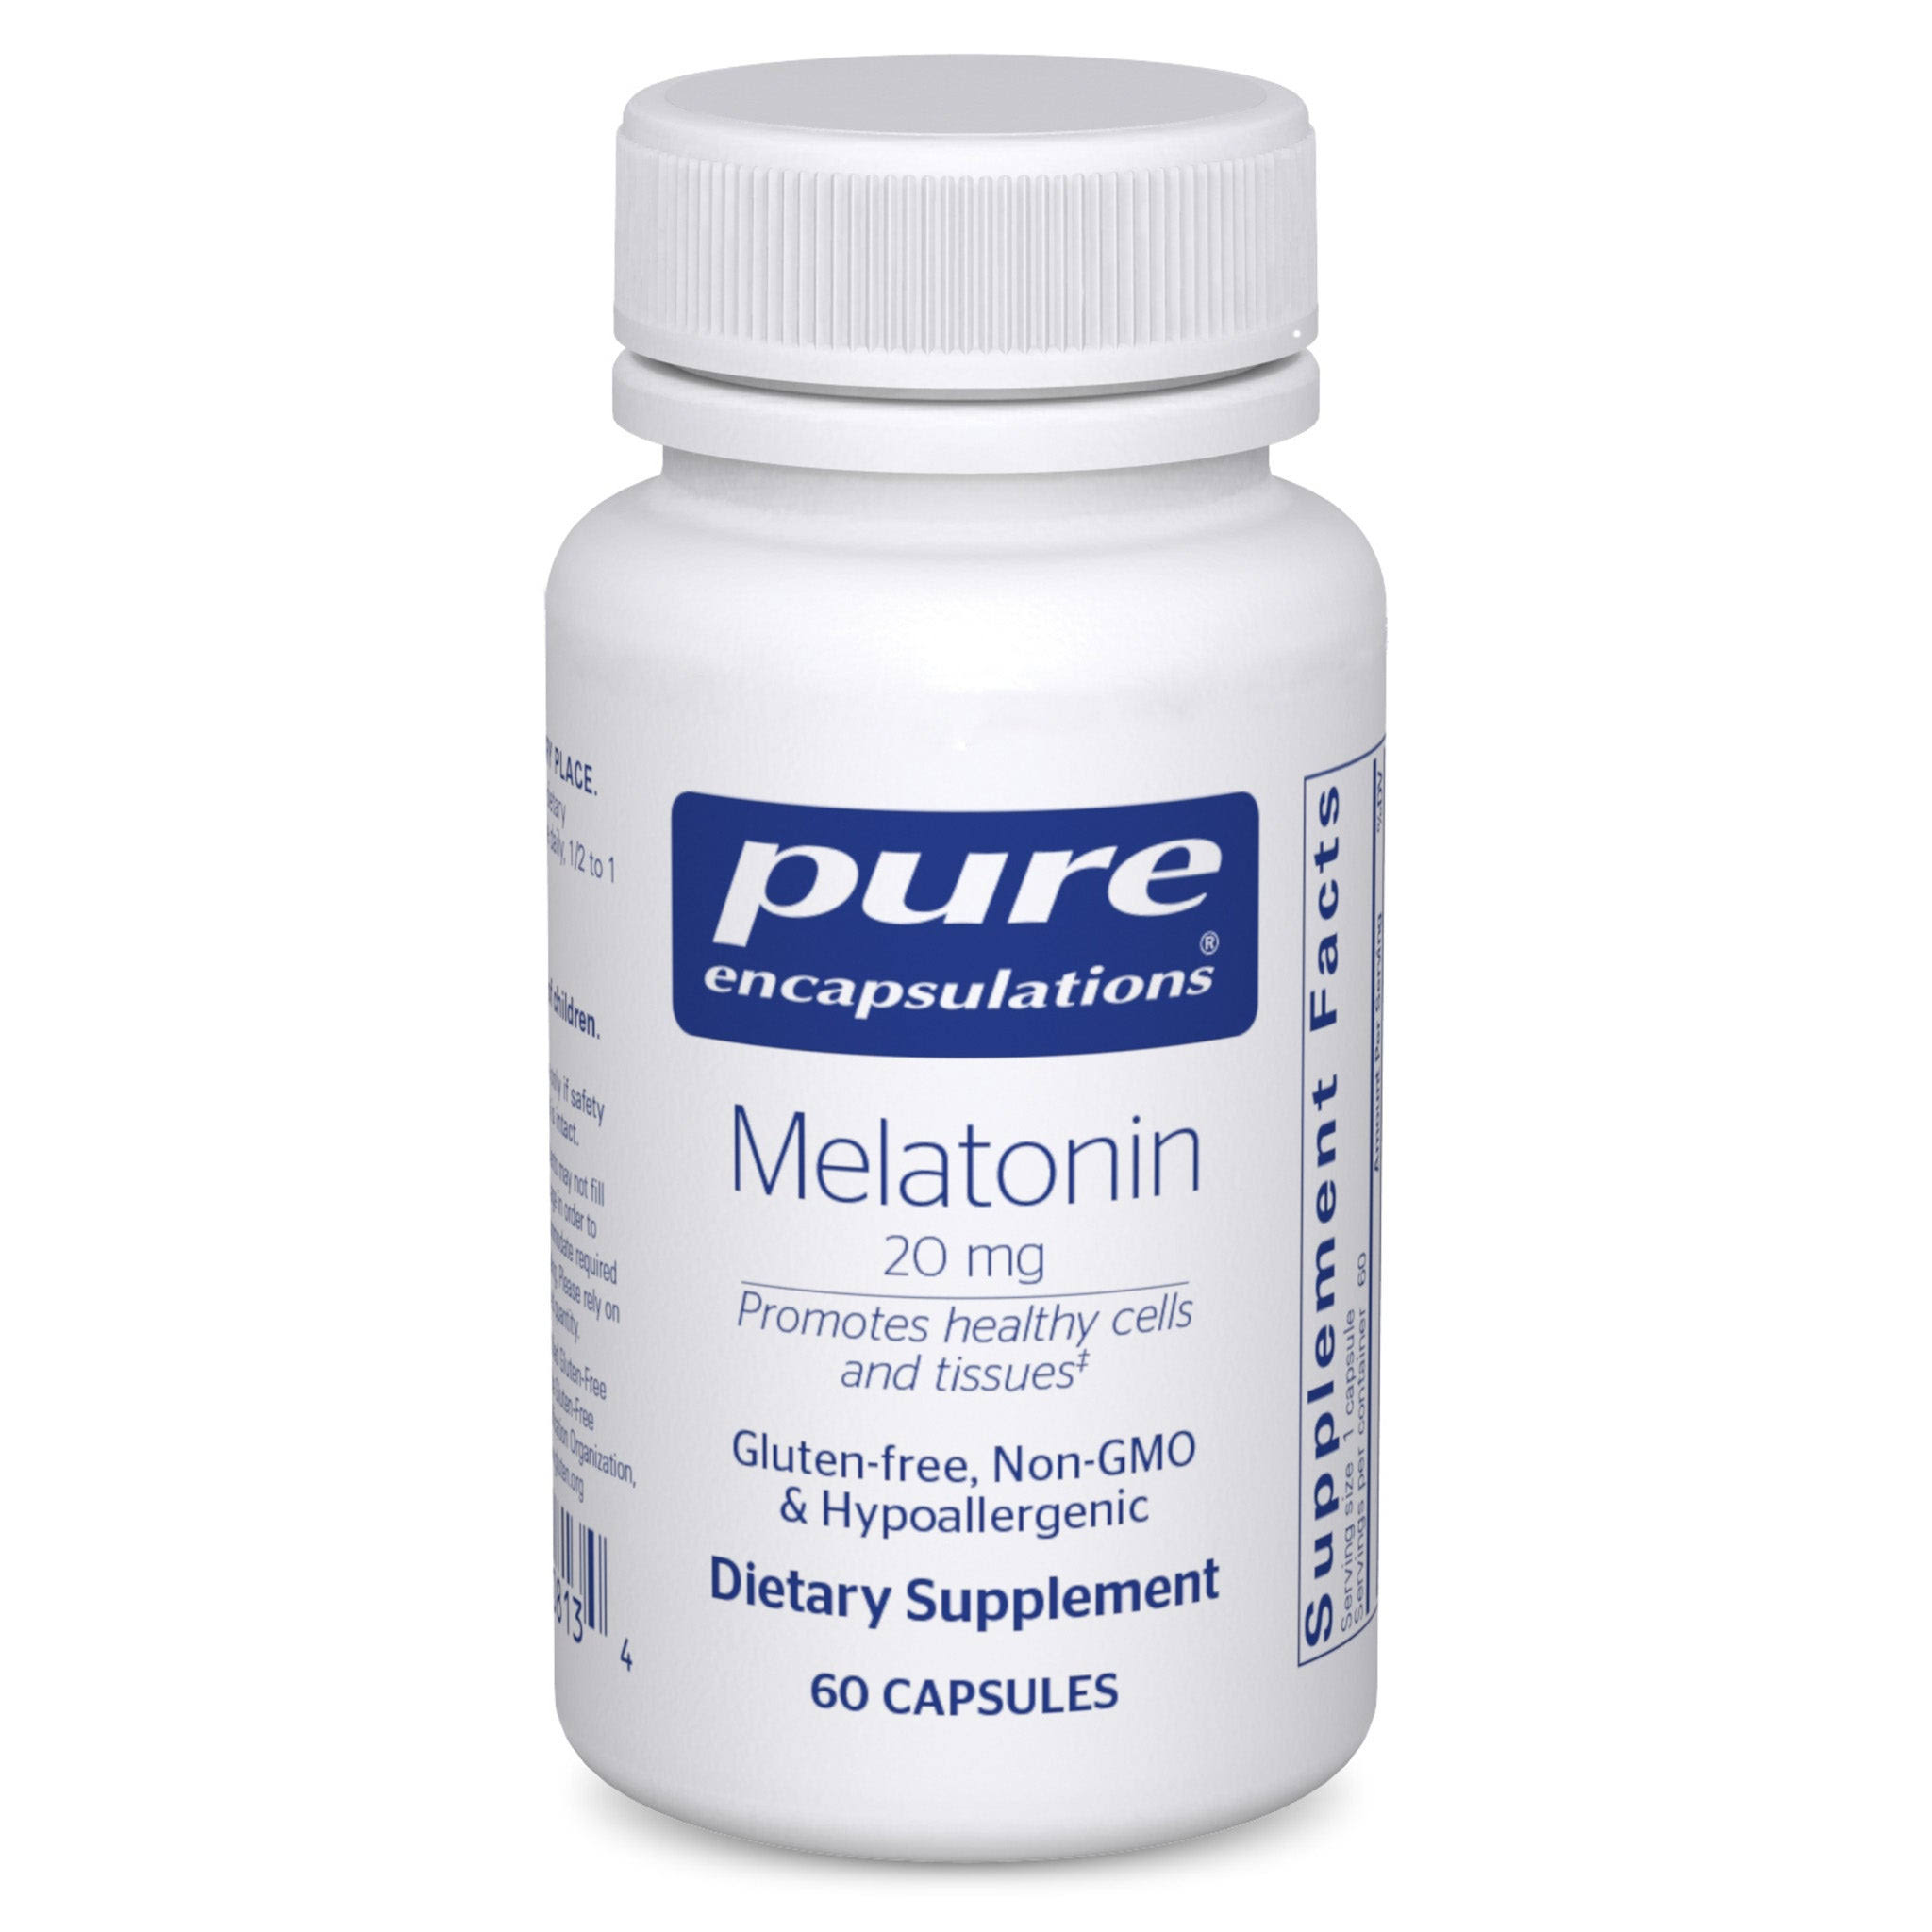 Pure Encapsulations Melatonin Dietary Supplement - 60ct